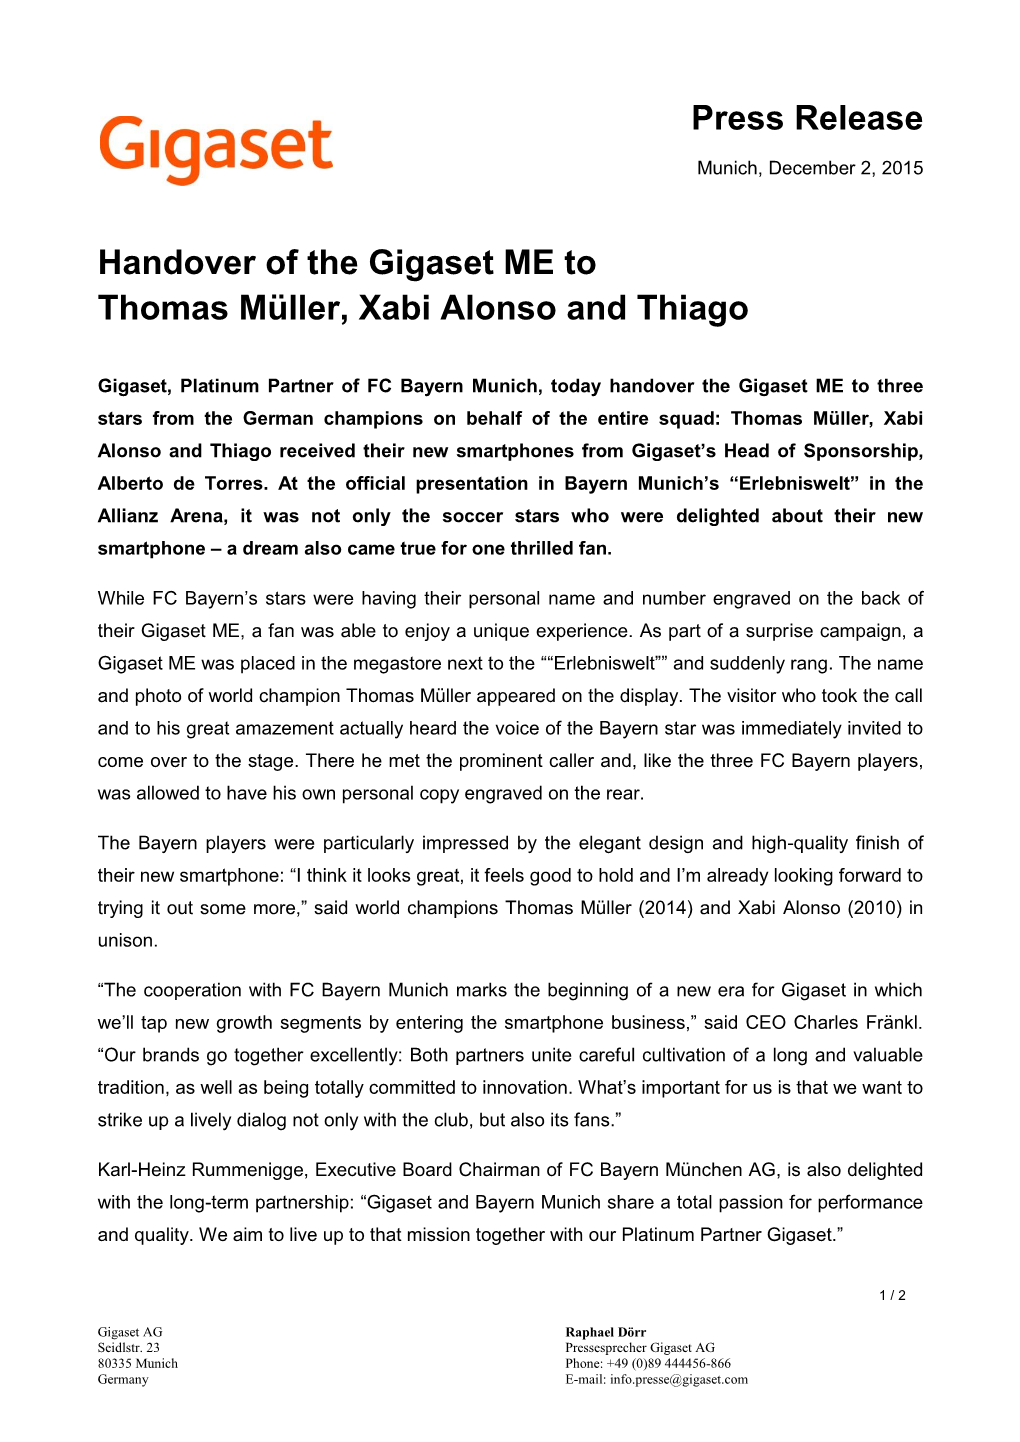 Press Release Handover of the Gigaset ME to Thomas Müller, Xabi